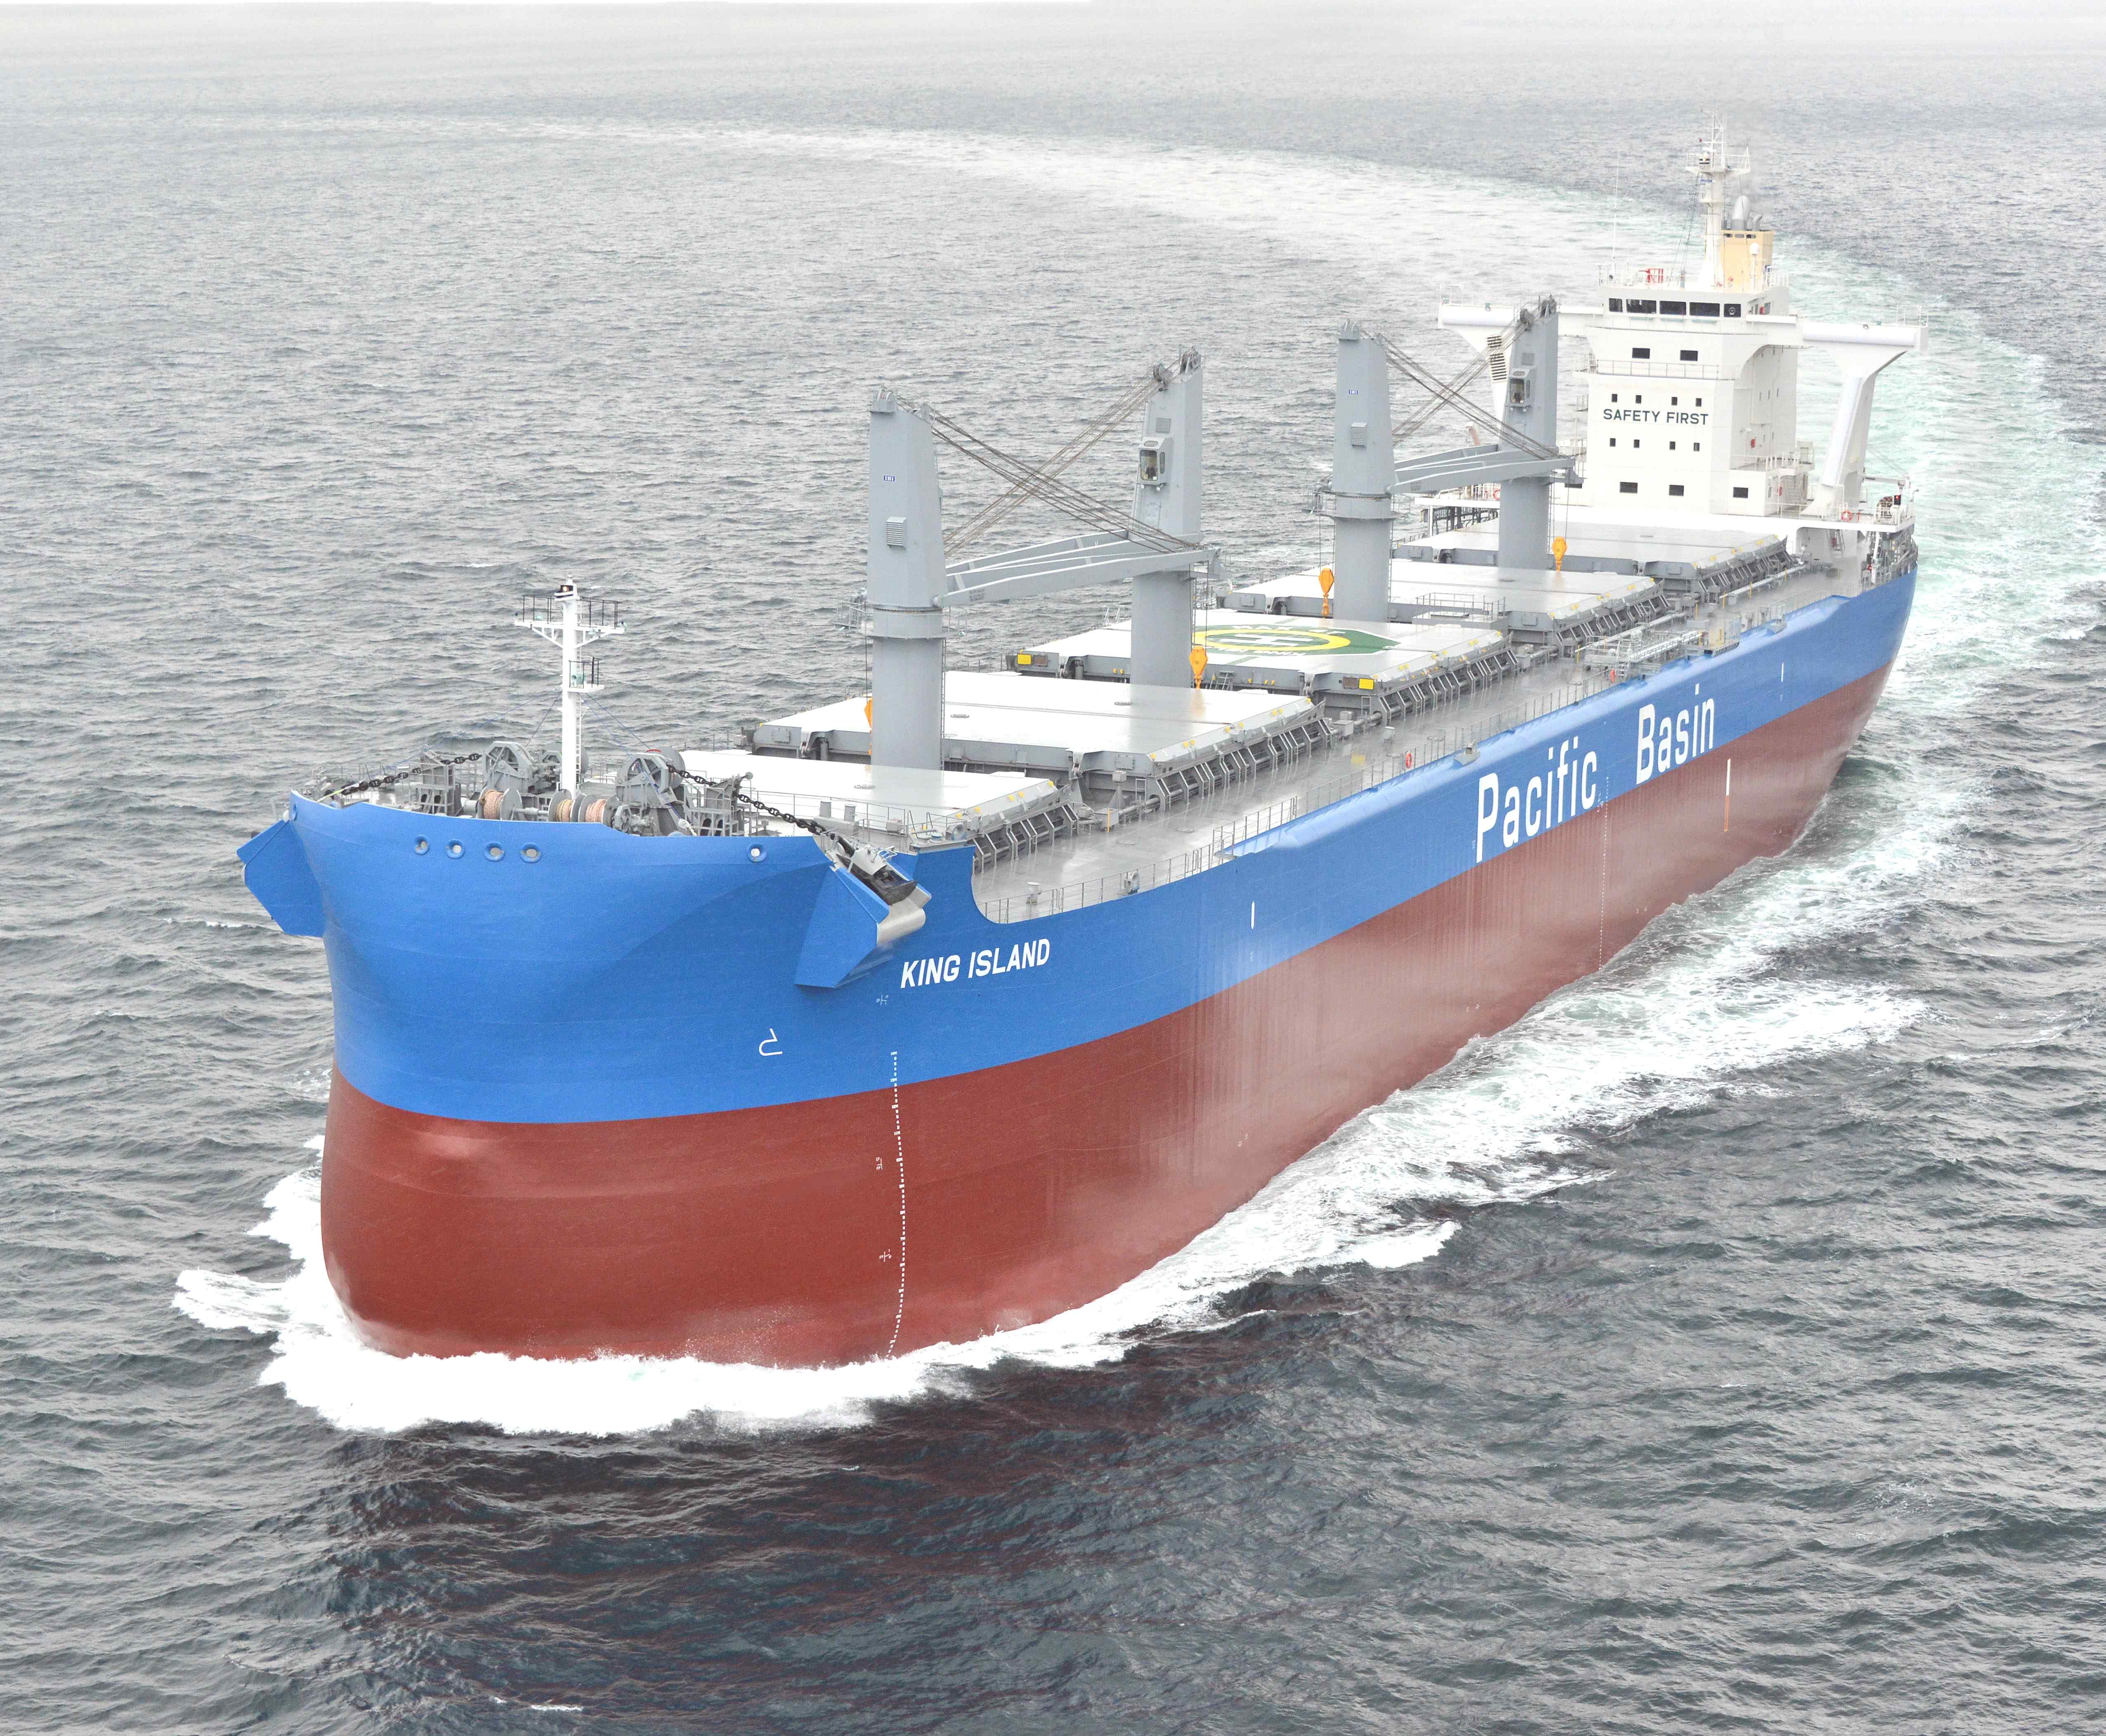 TESS58のプレミアム船型、5万7,500トン型バルカー “TESS58 AEROLINE” 3隻目を竣工・引渡～常石グループの国内造船会社、常石造船株式会社